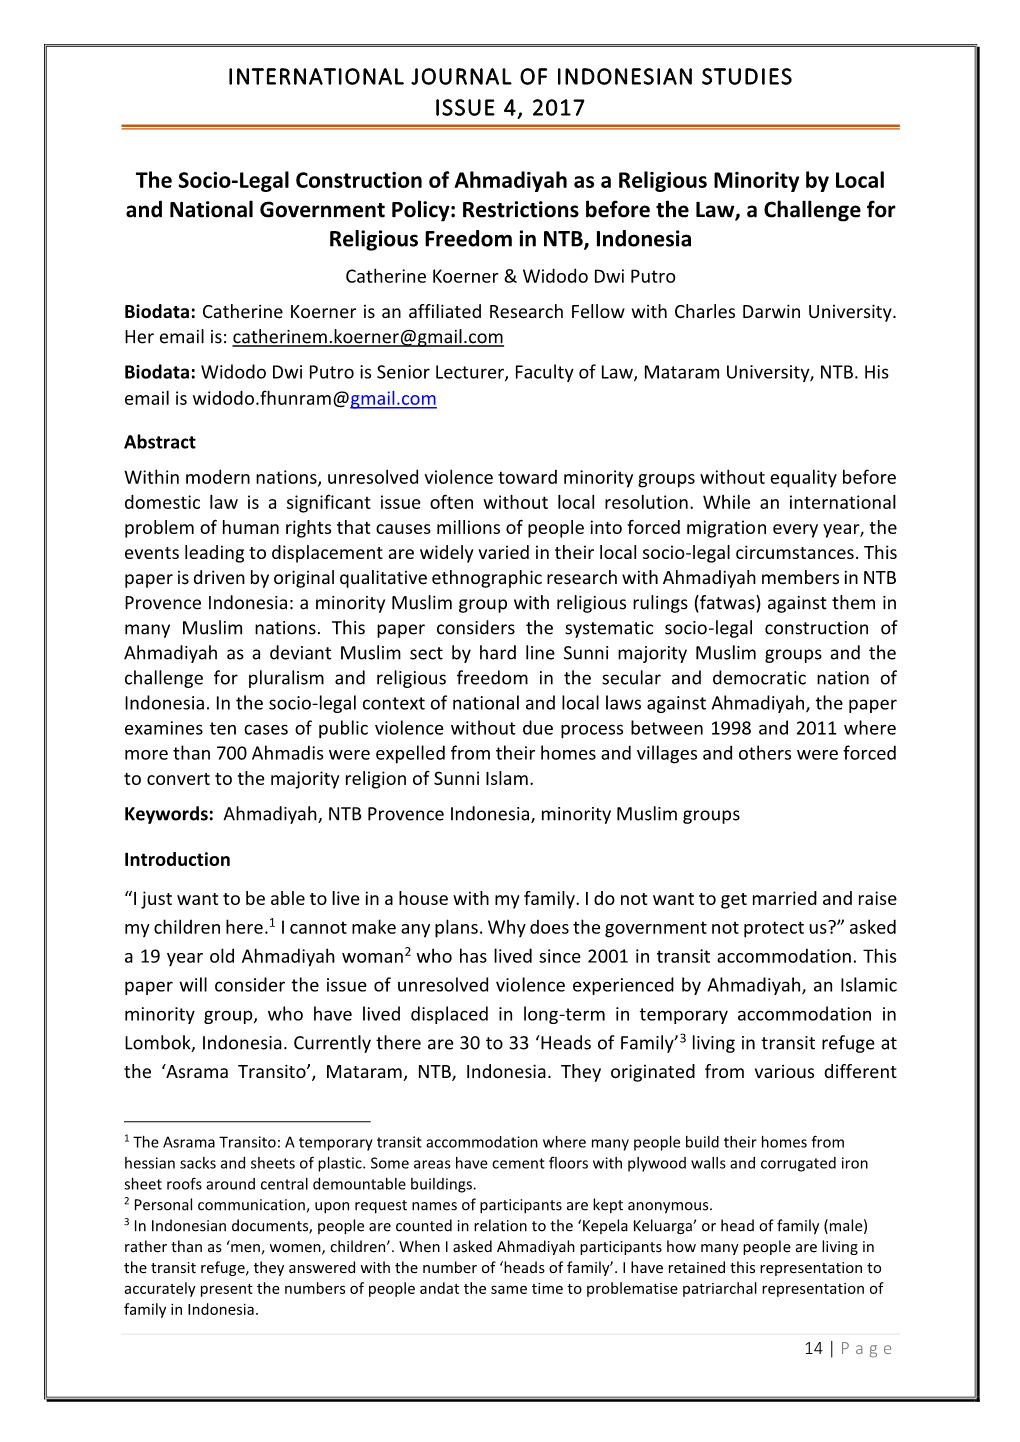 The Socio-Legal Construction of Ahmadiyah As a Religious Minority